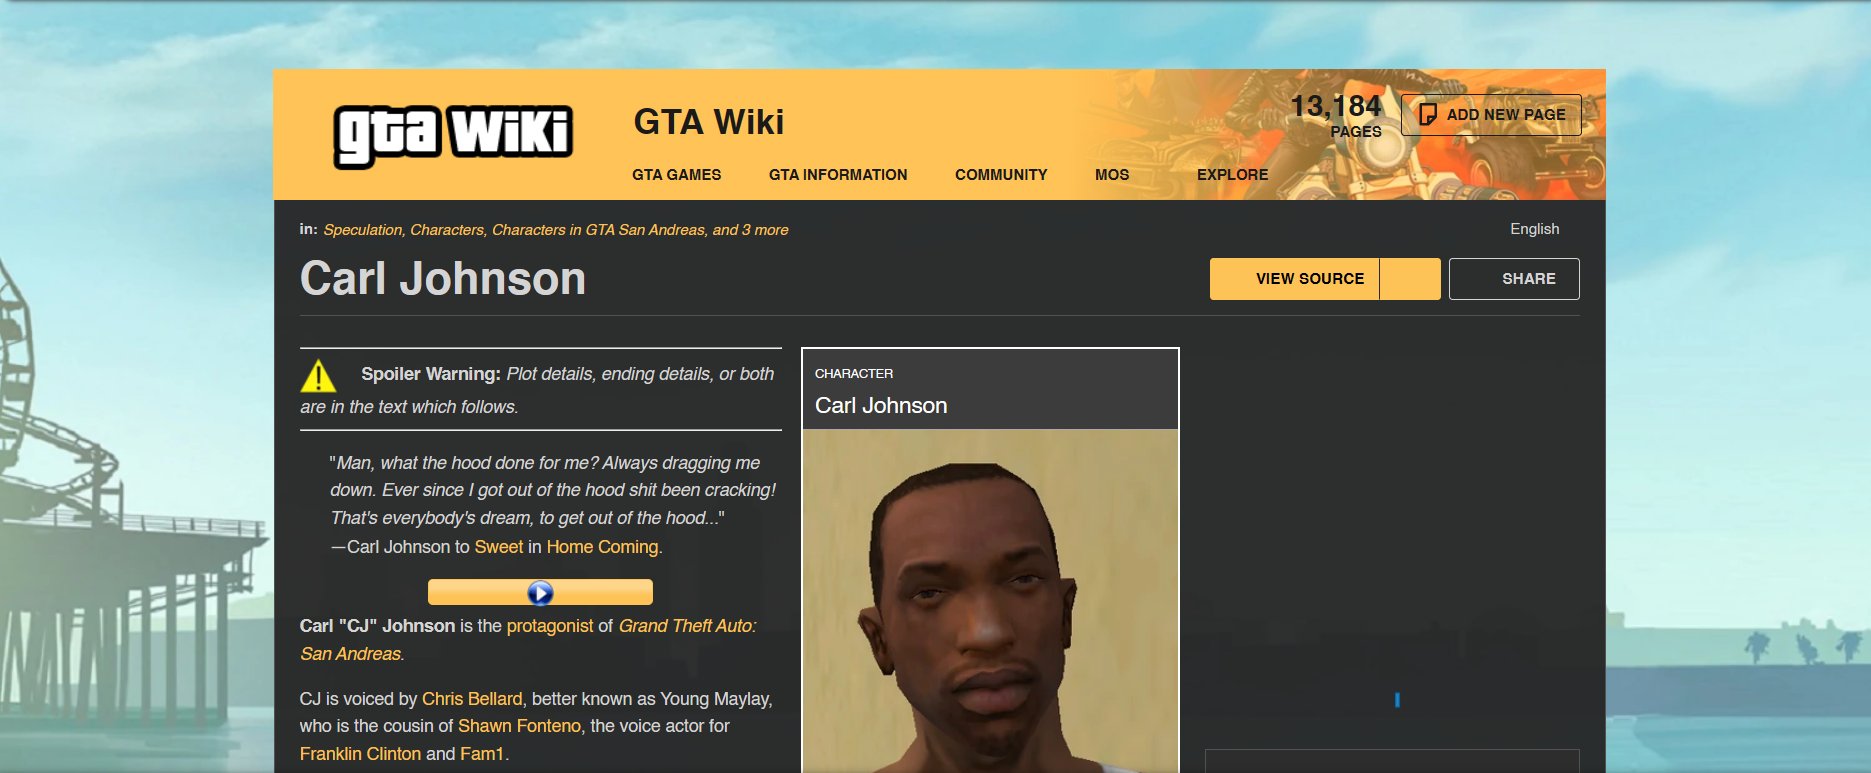 Grand Theft Auto: San Andreas, GTA Wiki